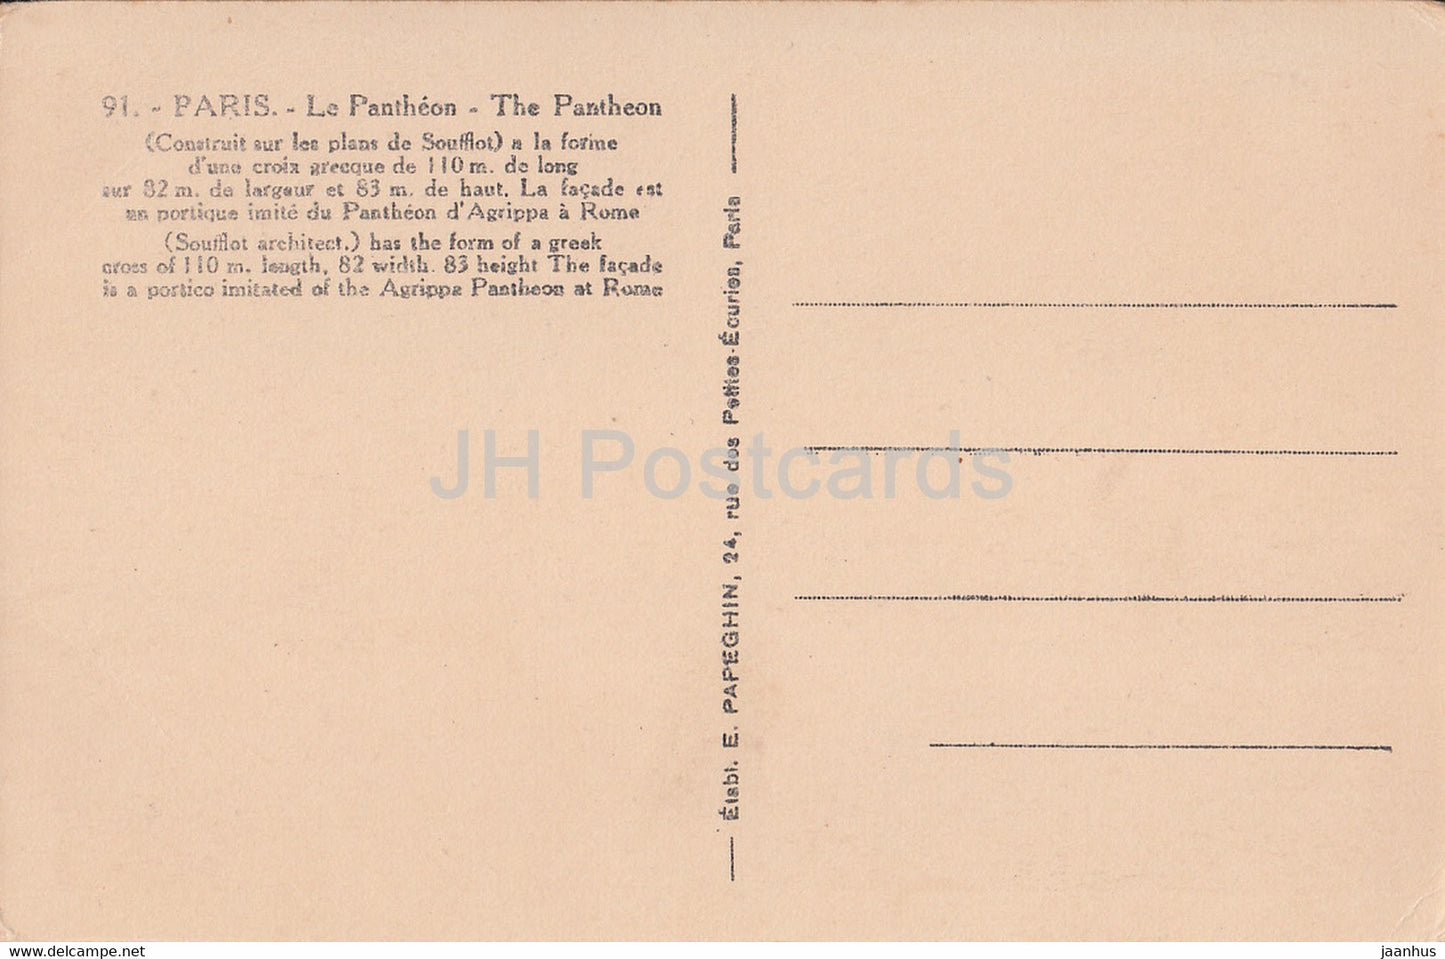 Paris - Le Pantheon - The Pantheon - 91 - old postcard - France - unused